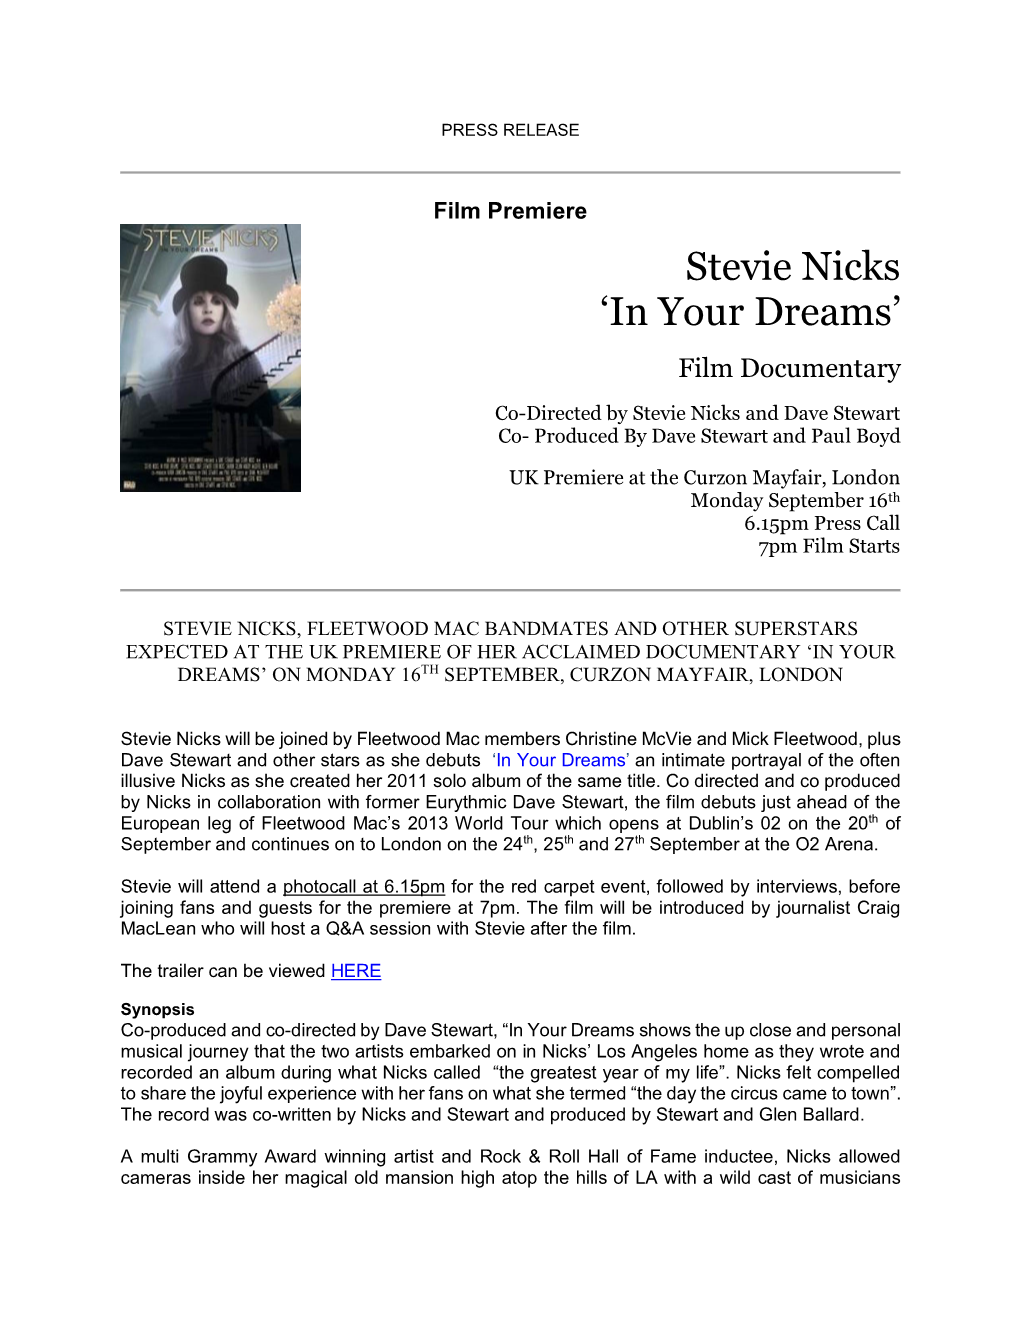 Stevie Nicks 'In Your Dreams'